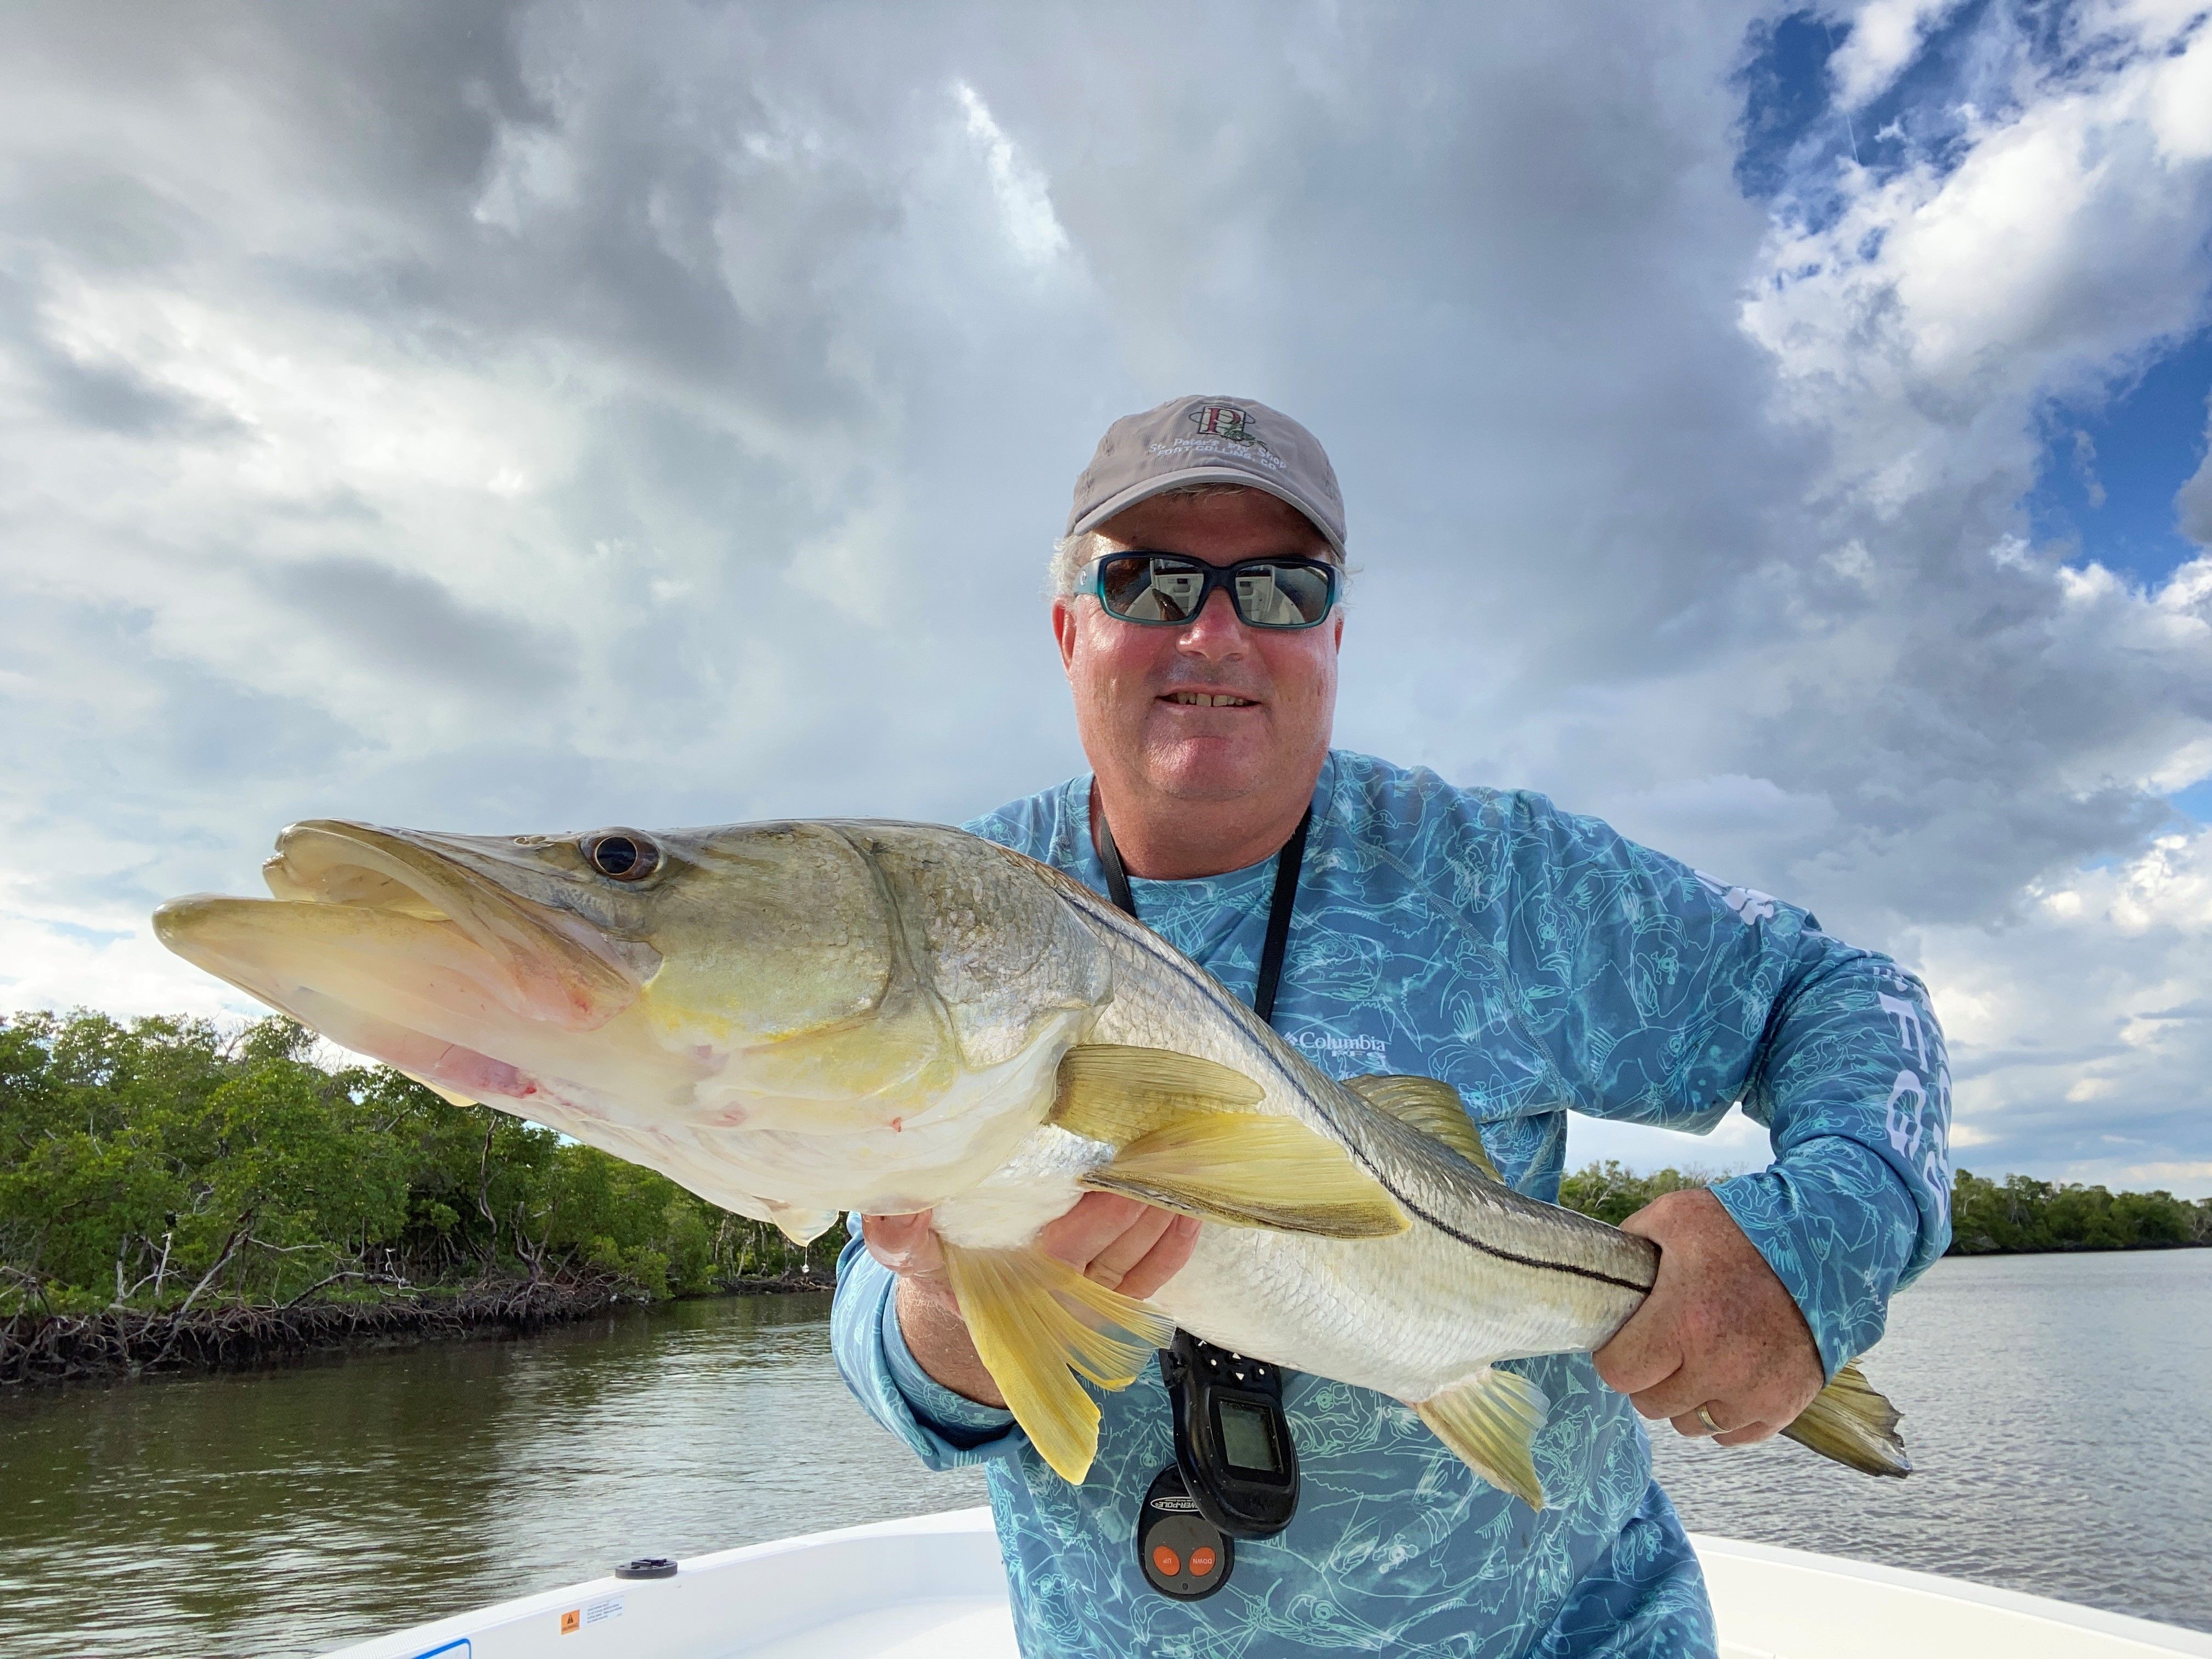 Inshore Odyssey Goodland Florida Fishing Charters - Full Day trip fishing Inshore